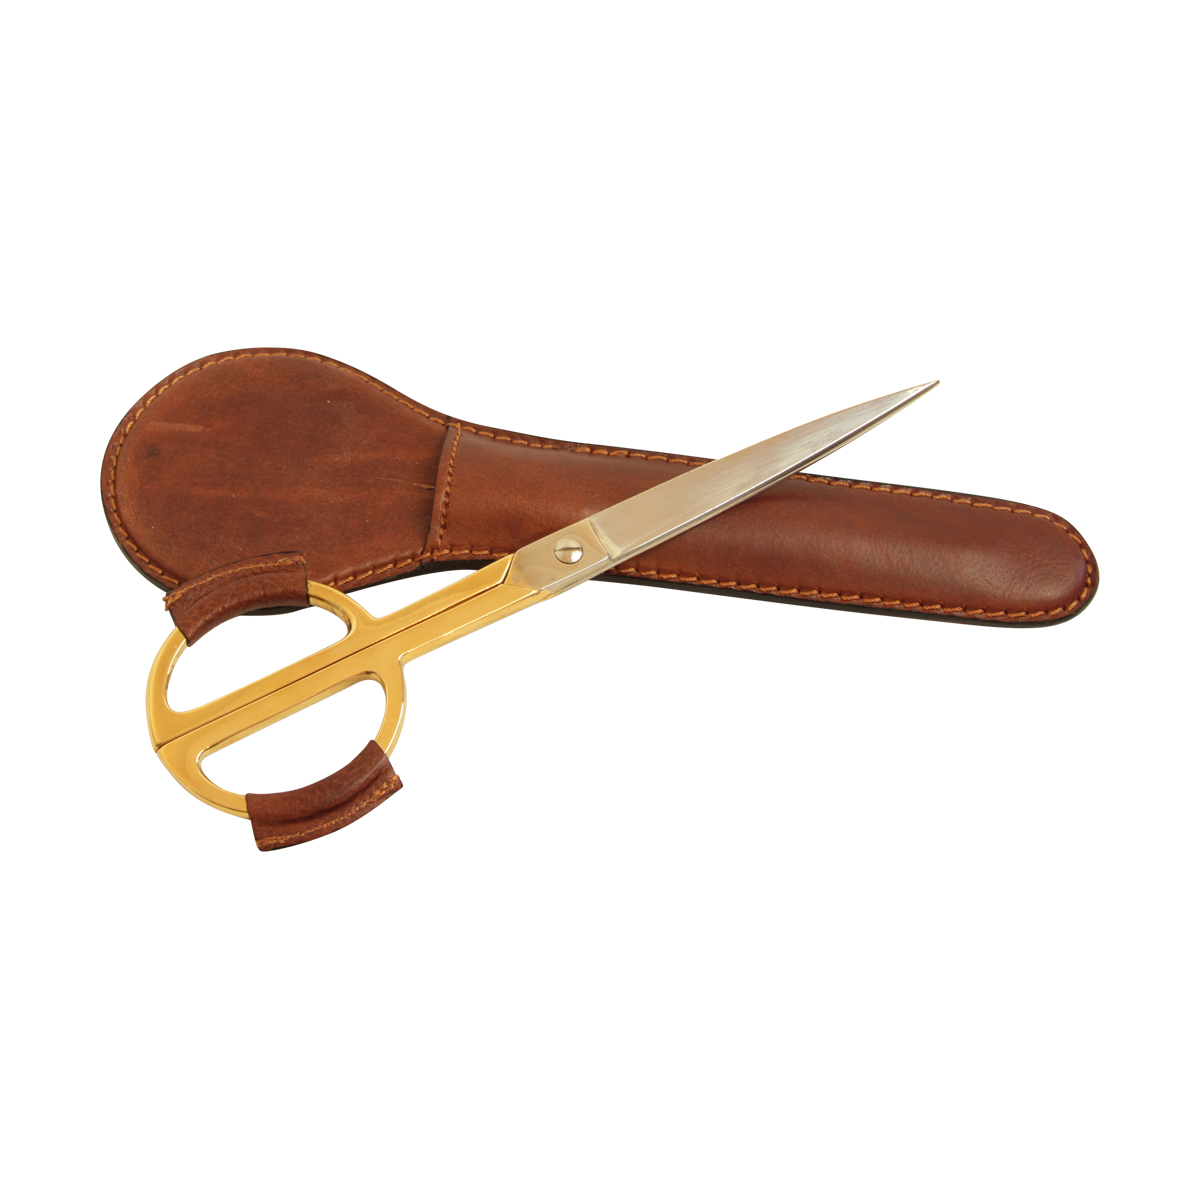 Leather scissors holder | 753605MA | EURO | Old Angler Firenze